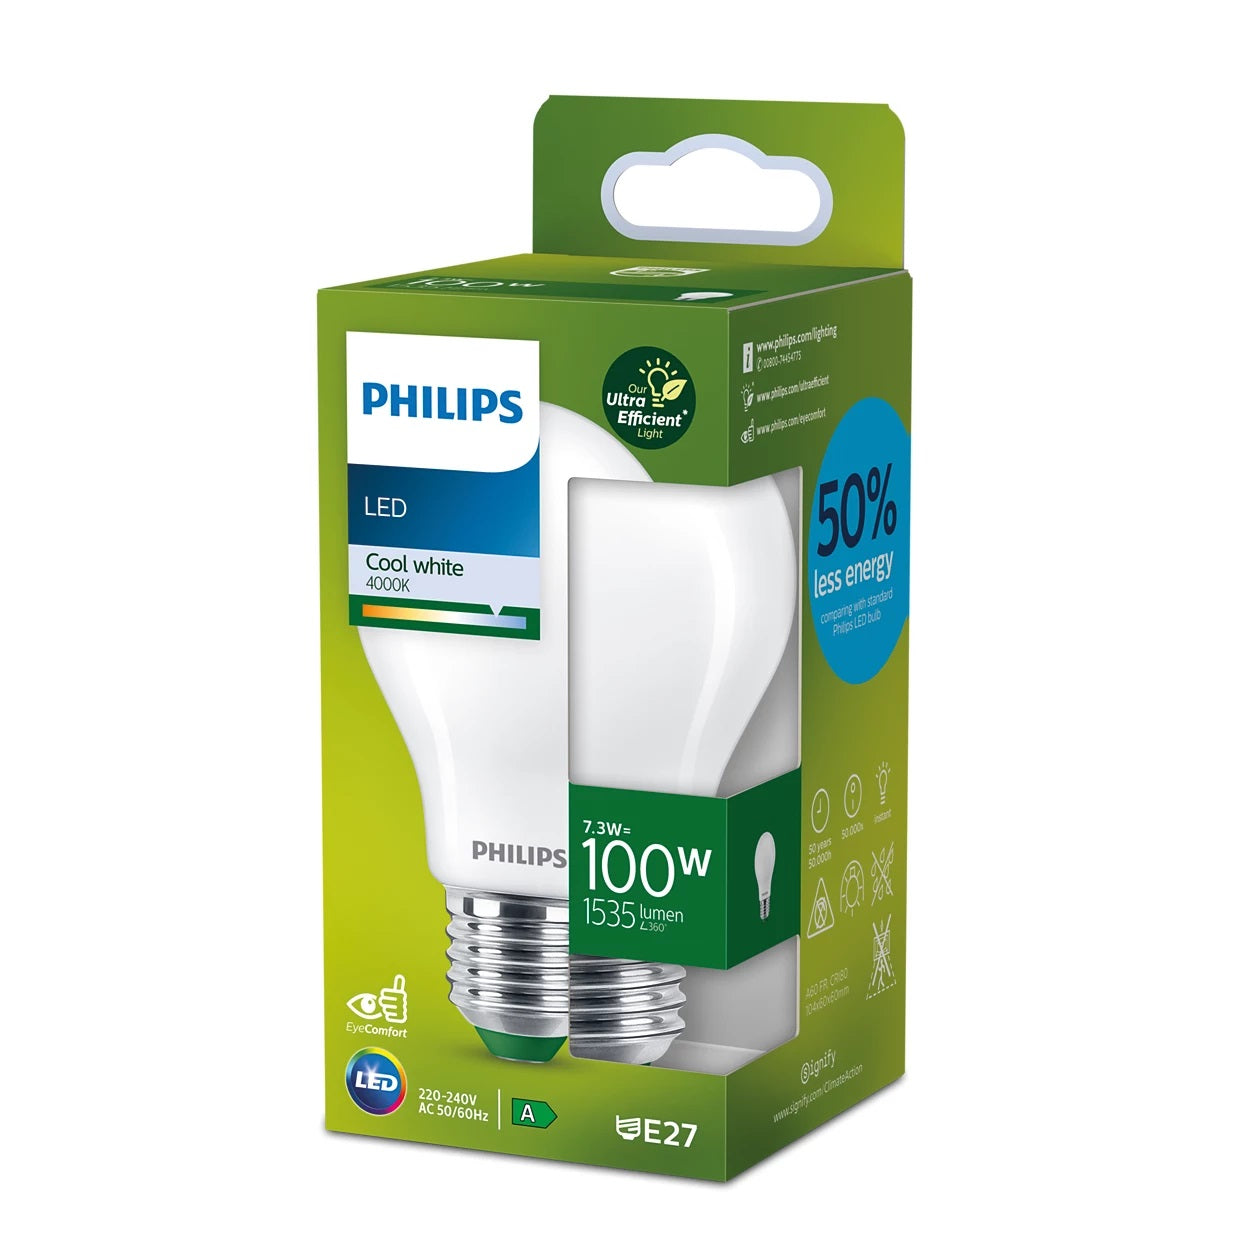 Philips Classic Filament LED bulb E27 CRI80 A-Class frosted 7.3-100W 4000K 1535lm